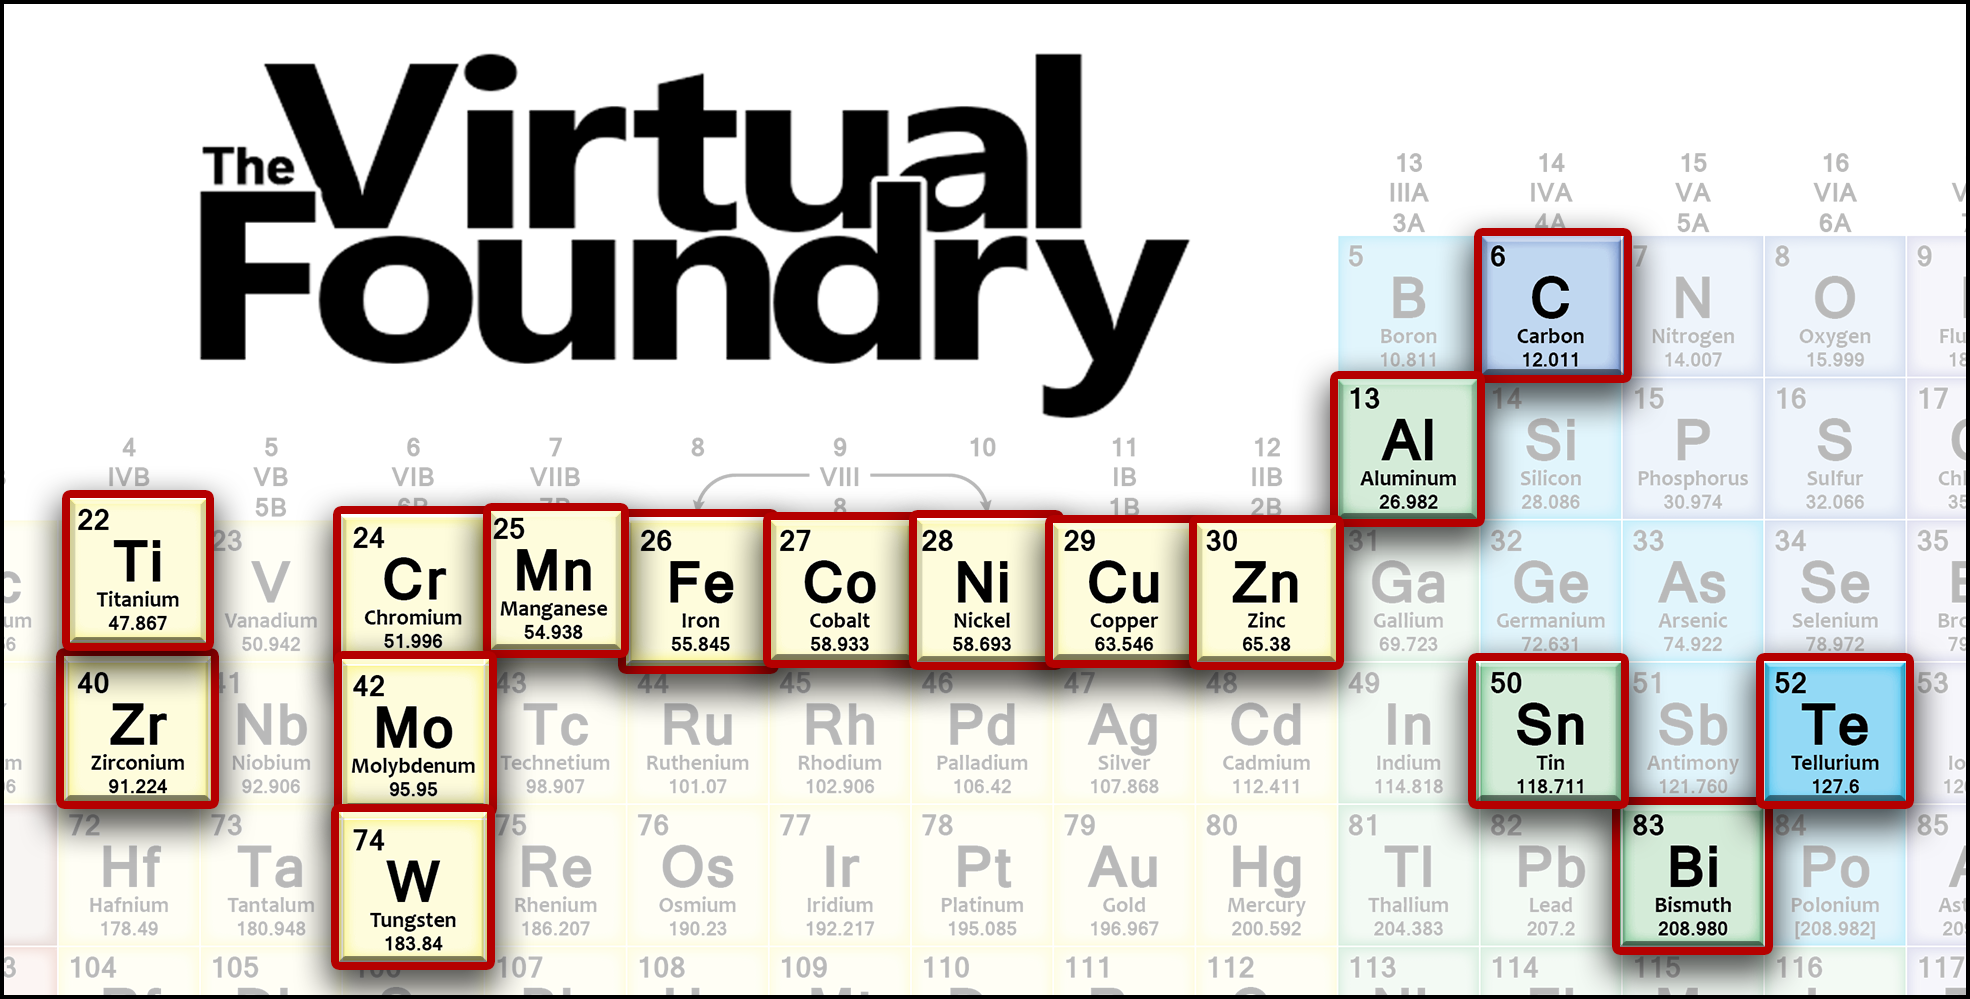 The Virtual Foundry range of materials.  Image via Virtual Foundry.